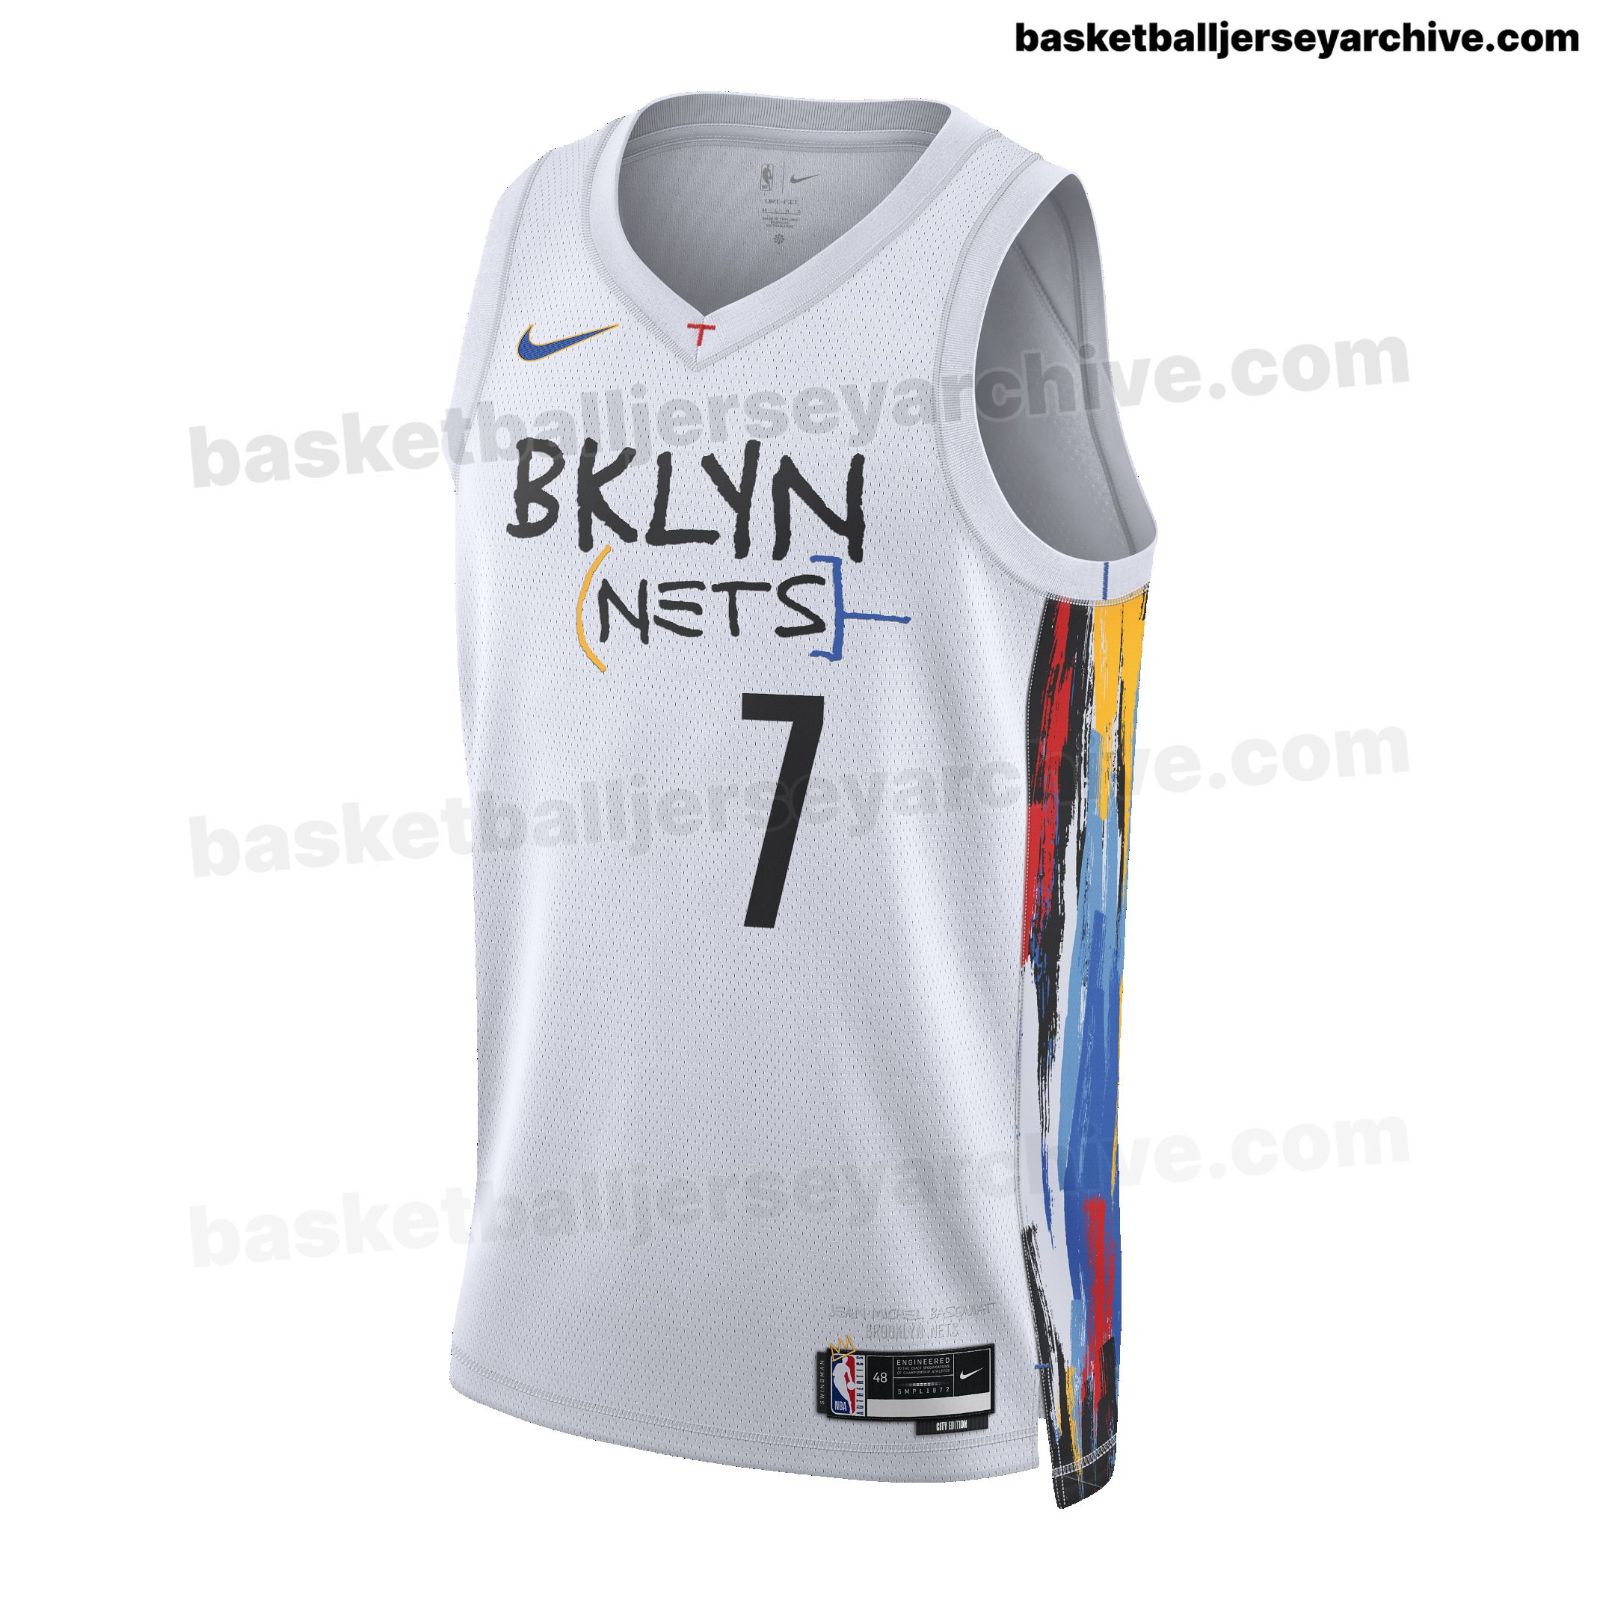 Nets 'City Edition' uniform to honor Brooklyn artist Jean-Michel Basquiat -  NetsDaily